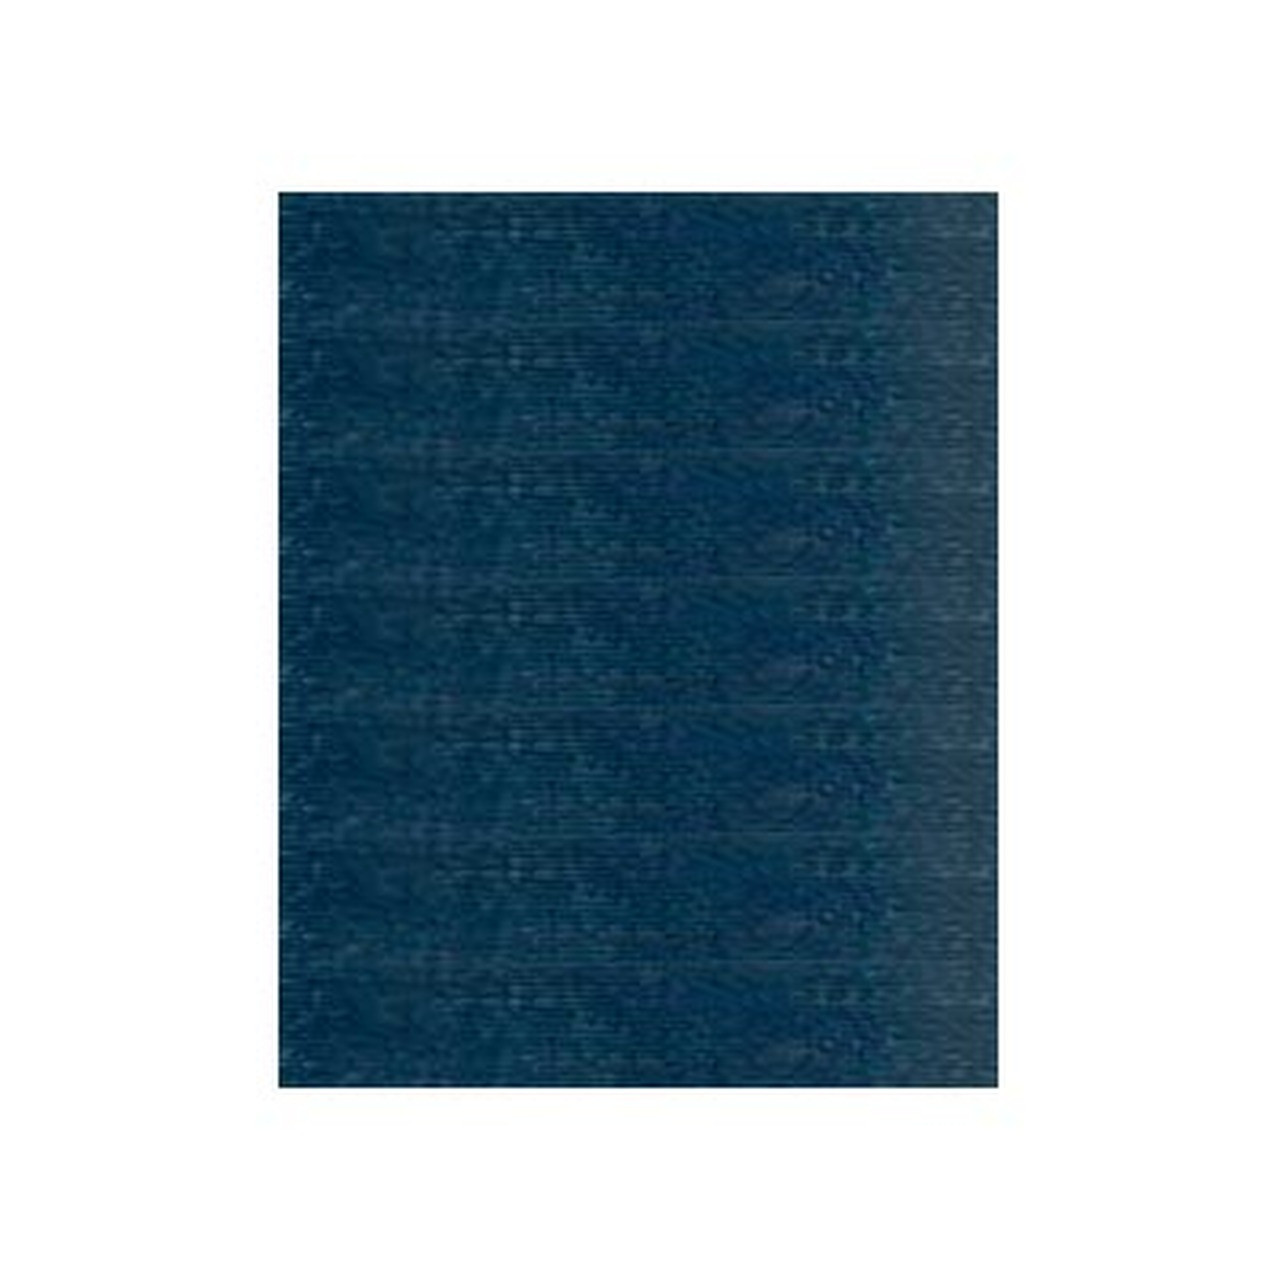 Classic - Rayon Thread - 910-1297 (Calypso Blue)